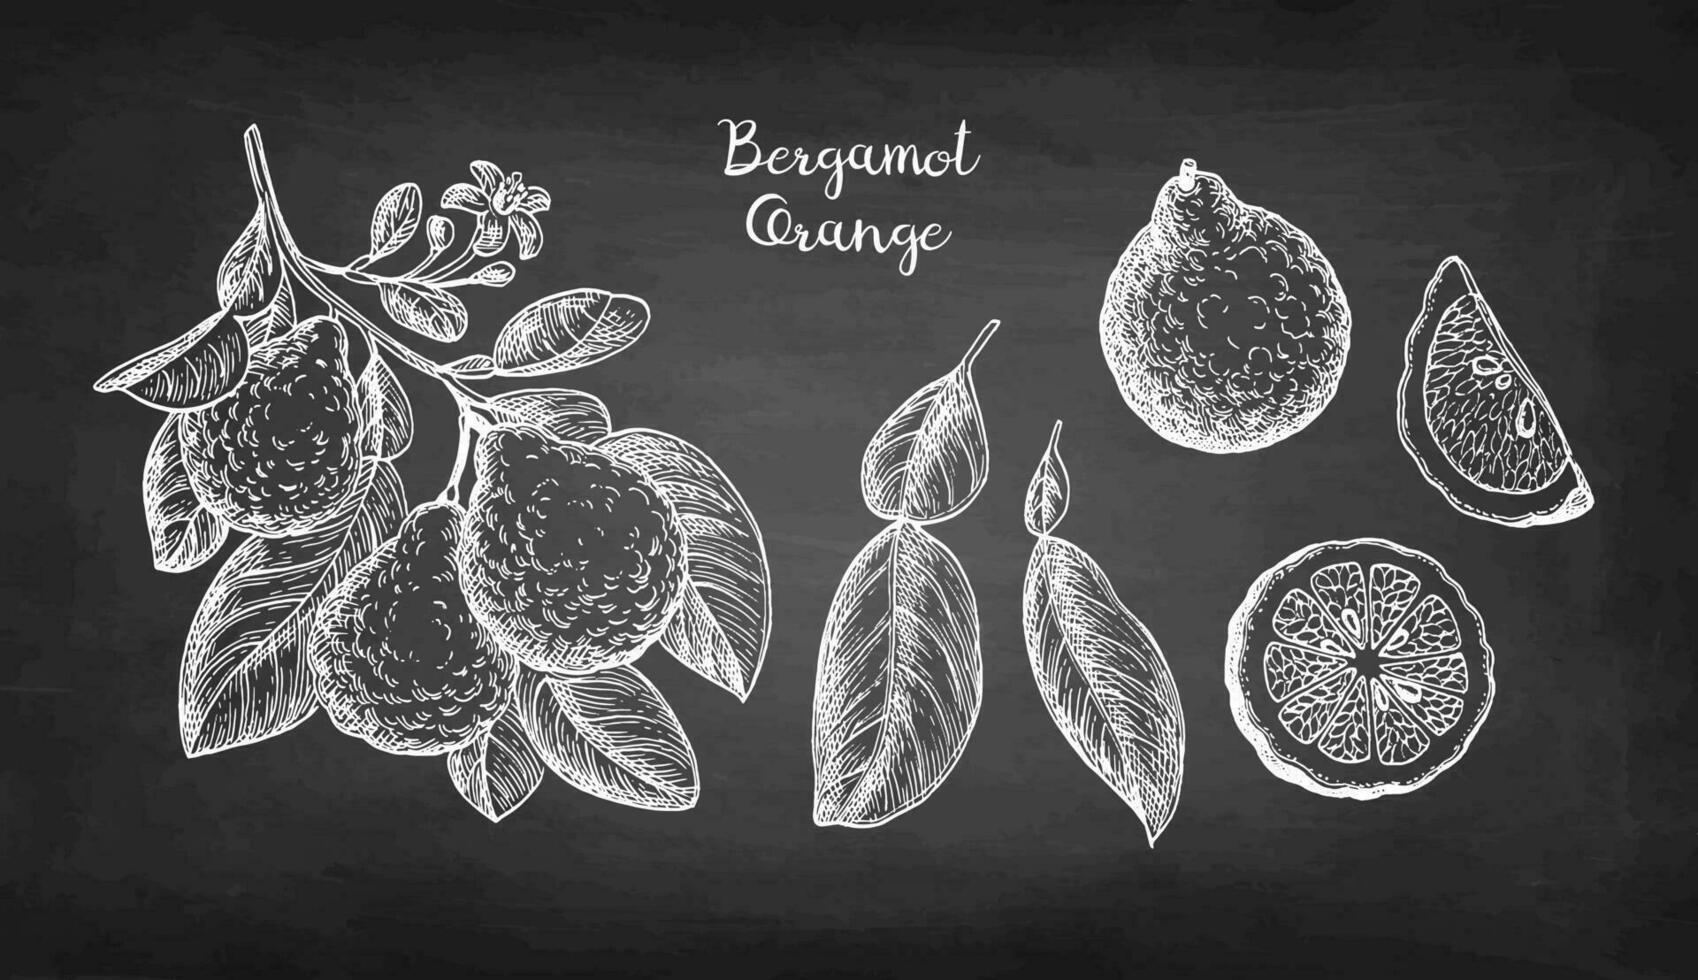 Bergamot orange. Branch, fruits and leaves. Chalk sketch set on blackboard background. Hand drawn vector illustration. Retro style.